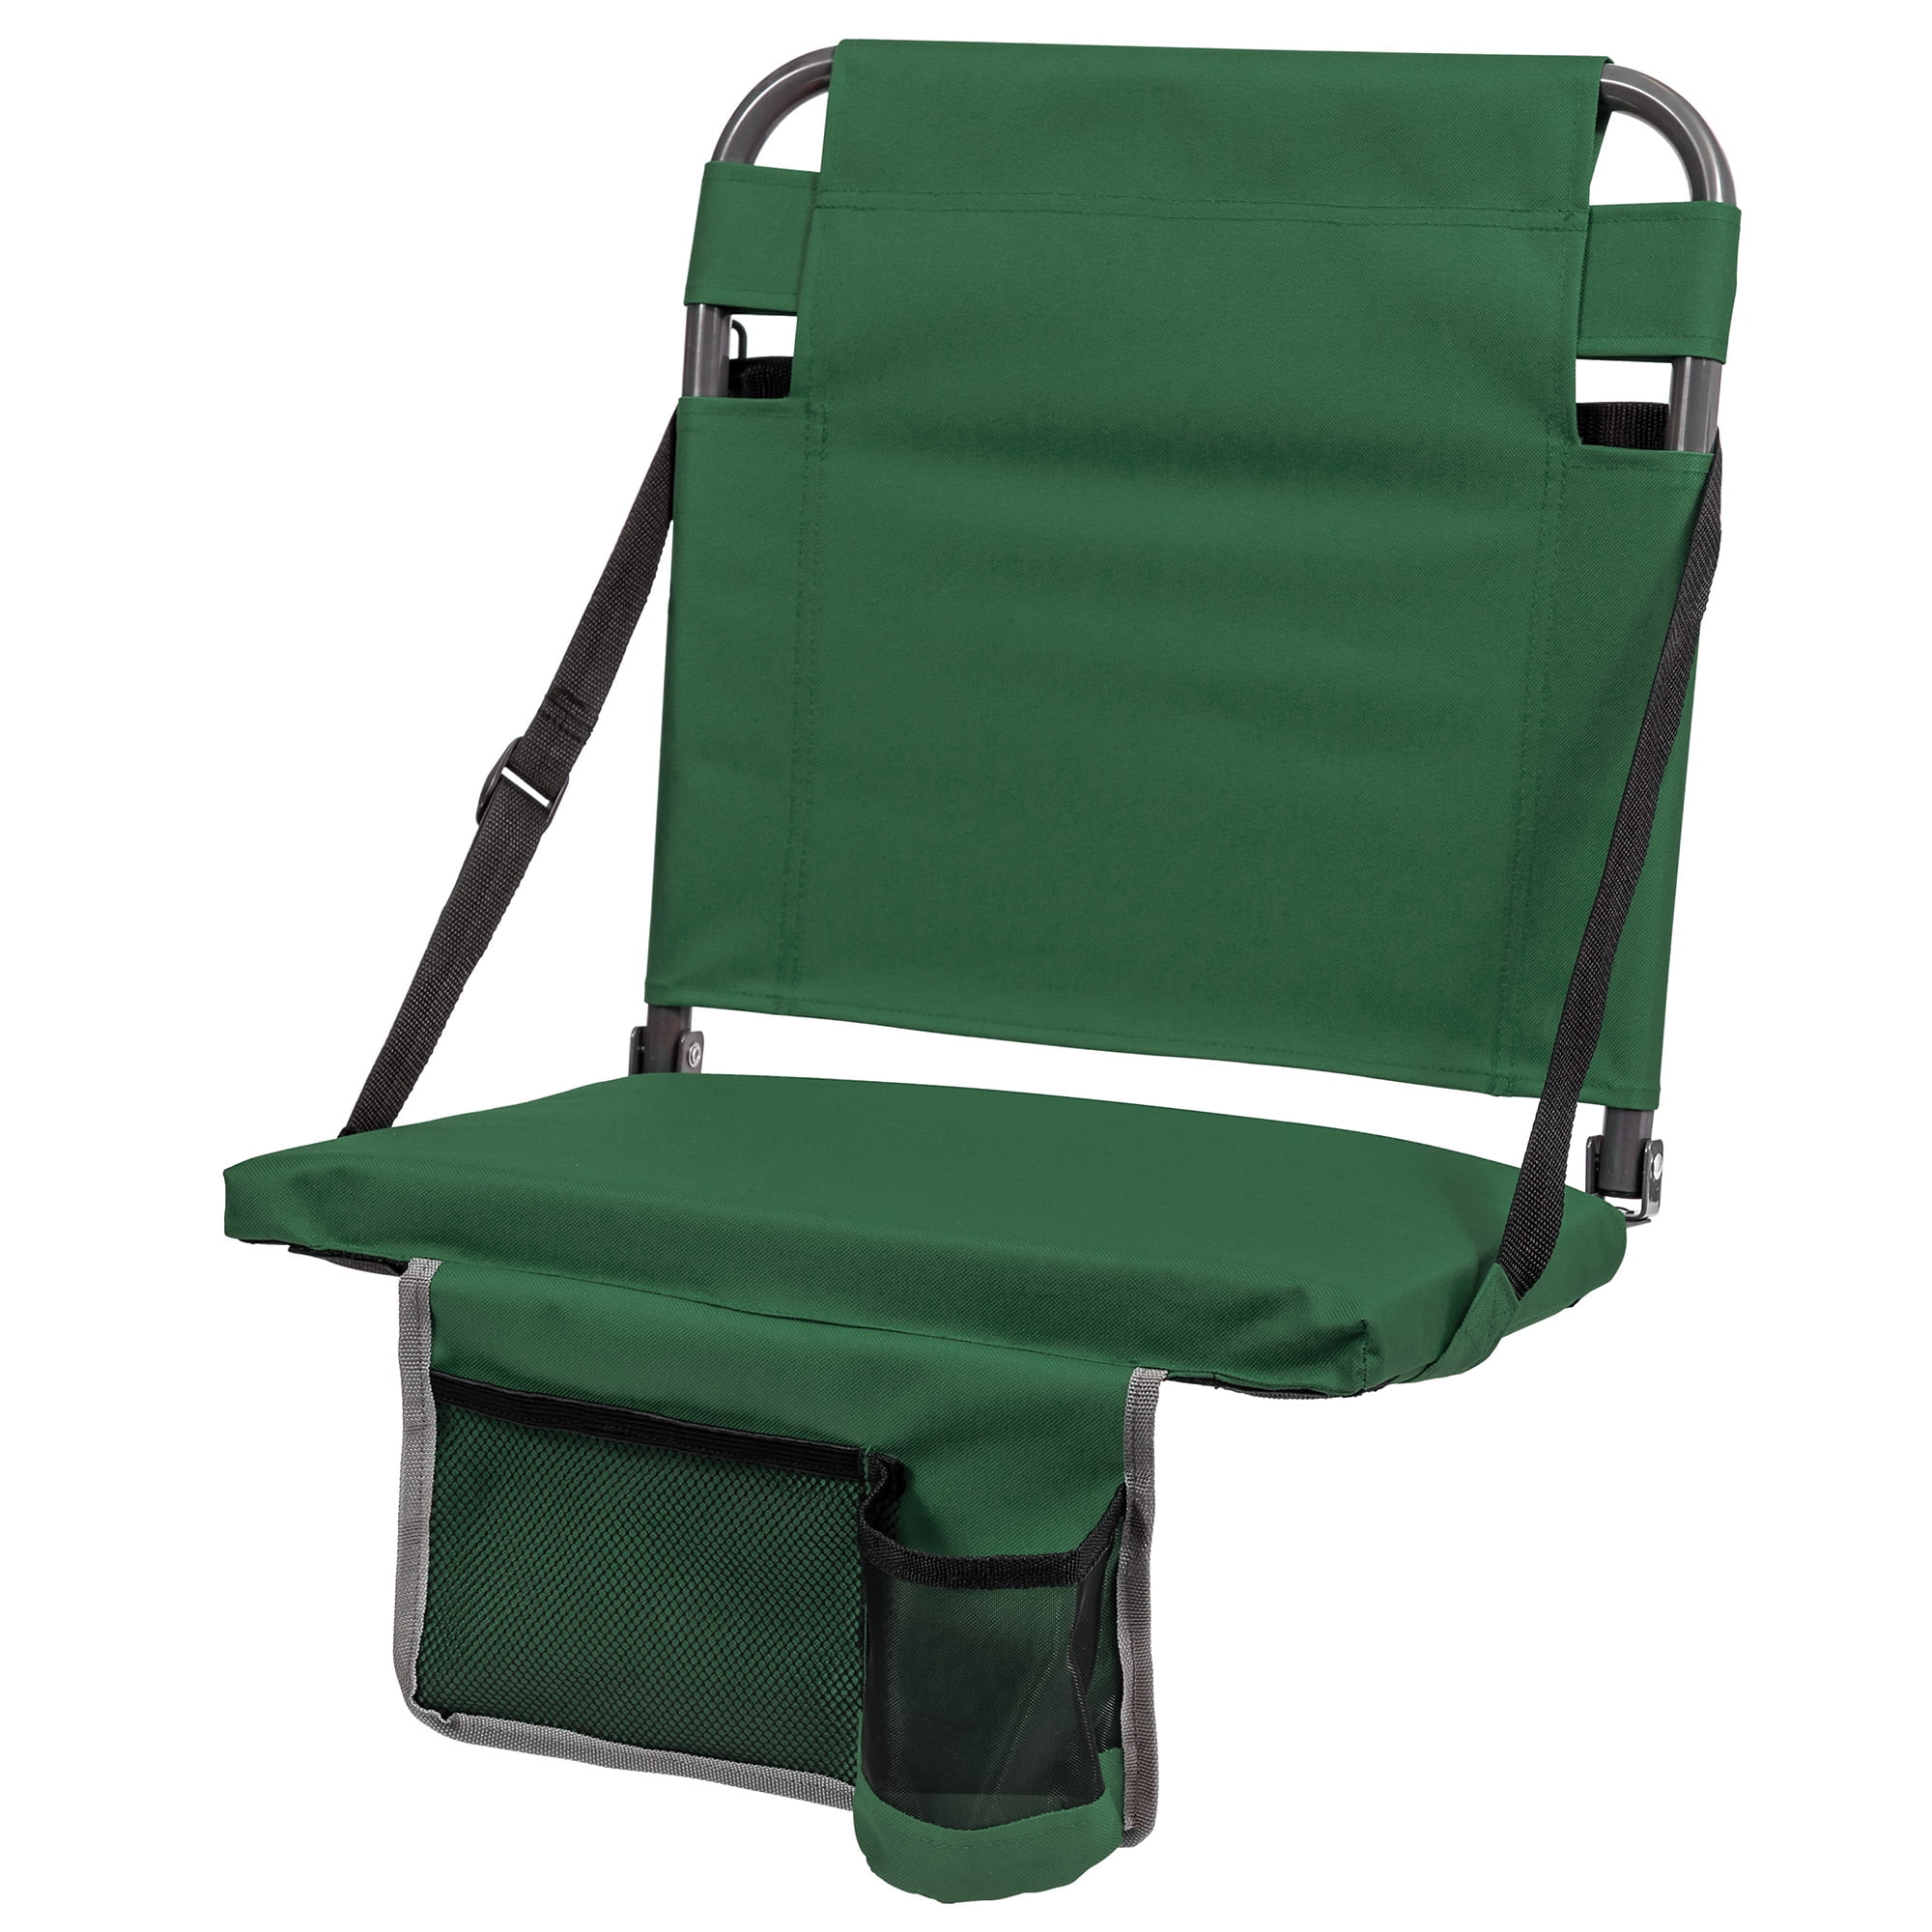 EastPoint Sports Portable Bleacher Back Stadium Seat, Green, 18'H x 17'W x  12.5'D. 